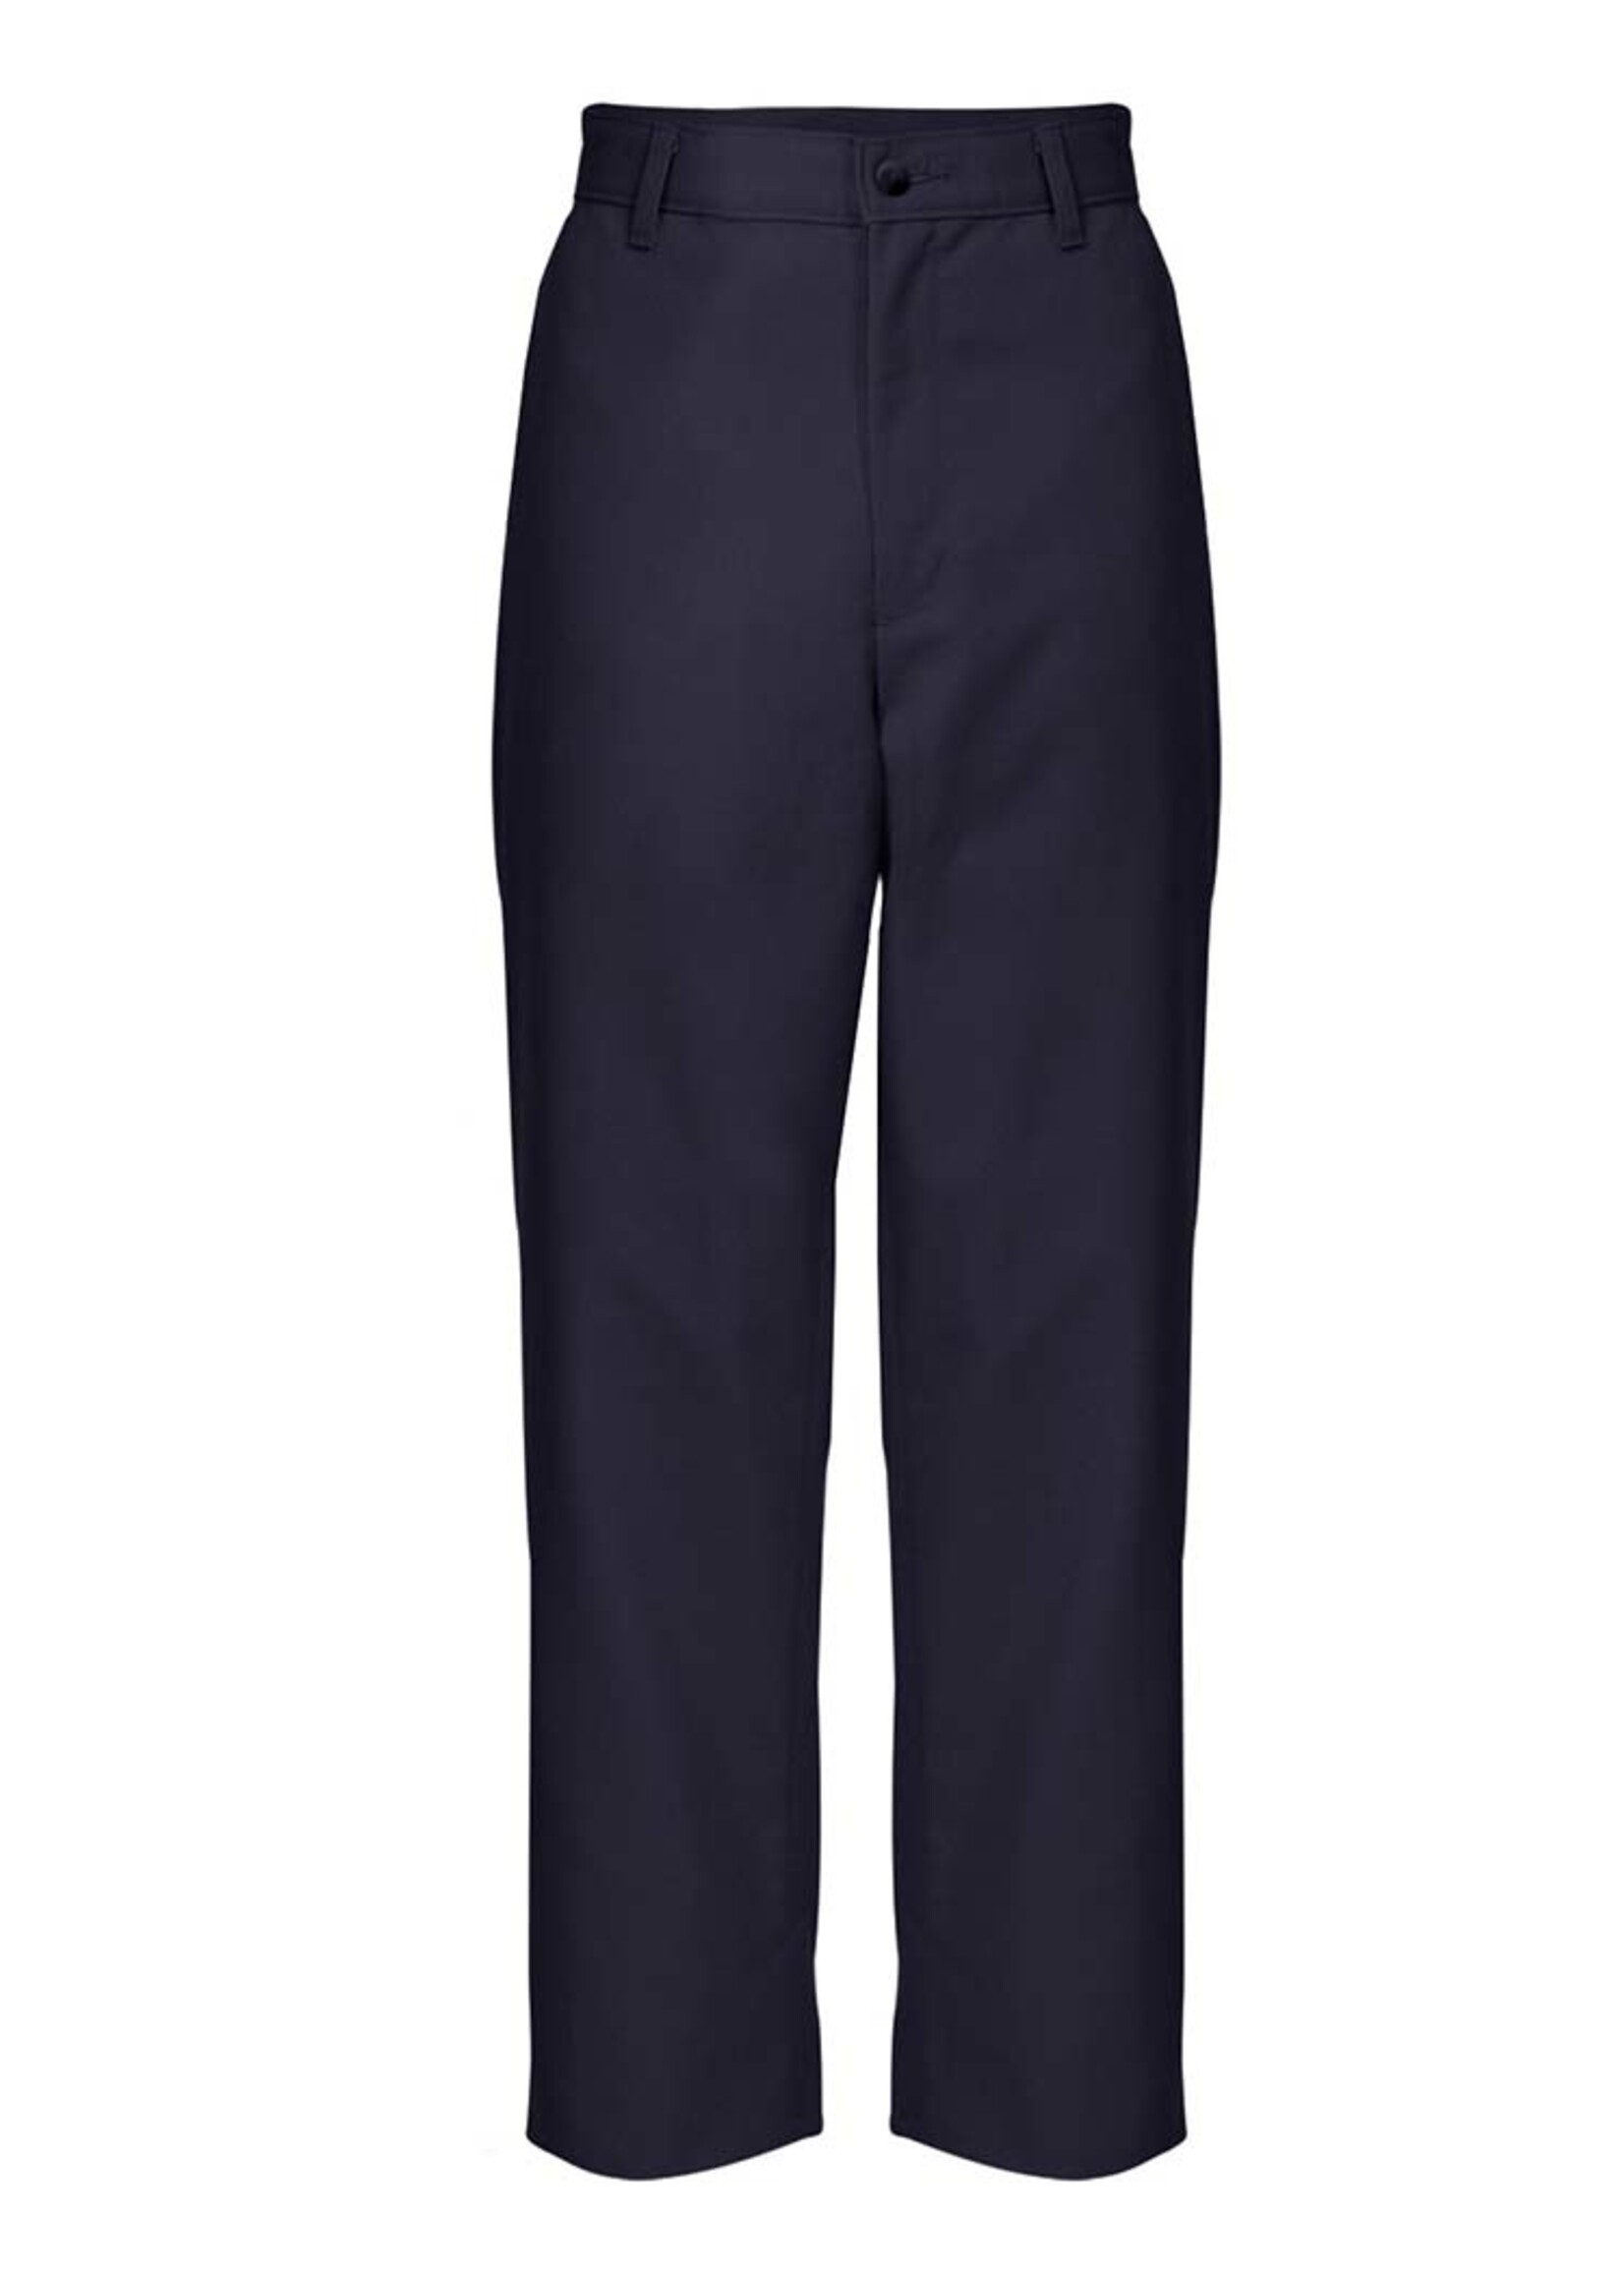 7014-Boy's Dri-fit Pants – Ivy School Uniforms